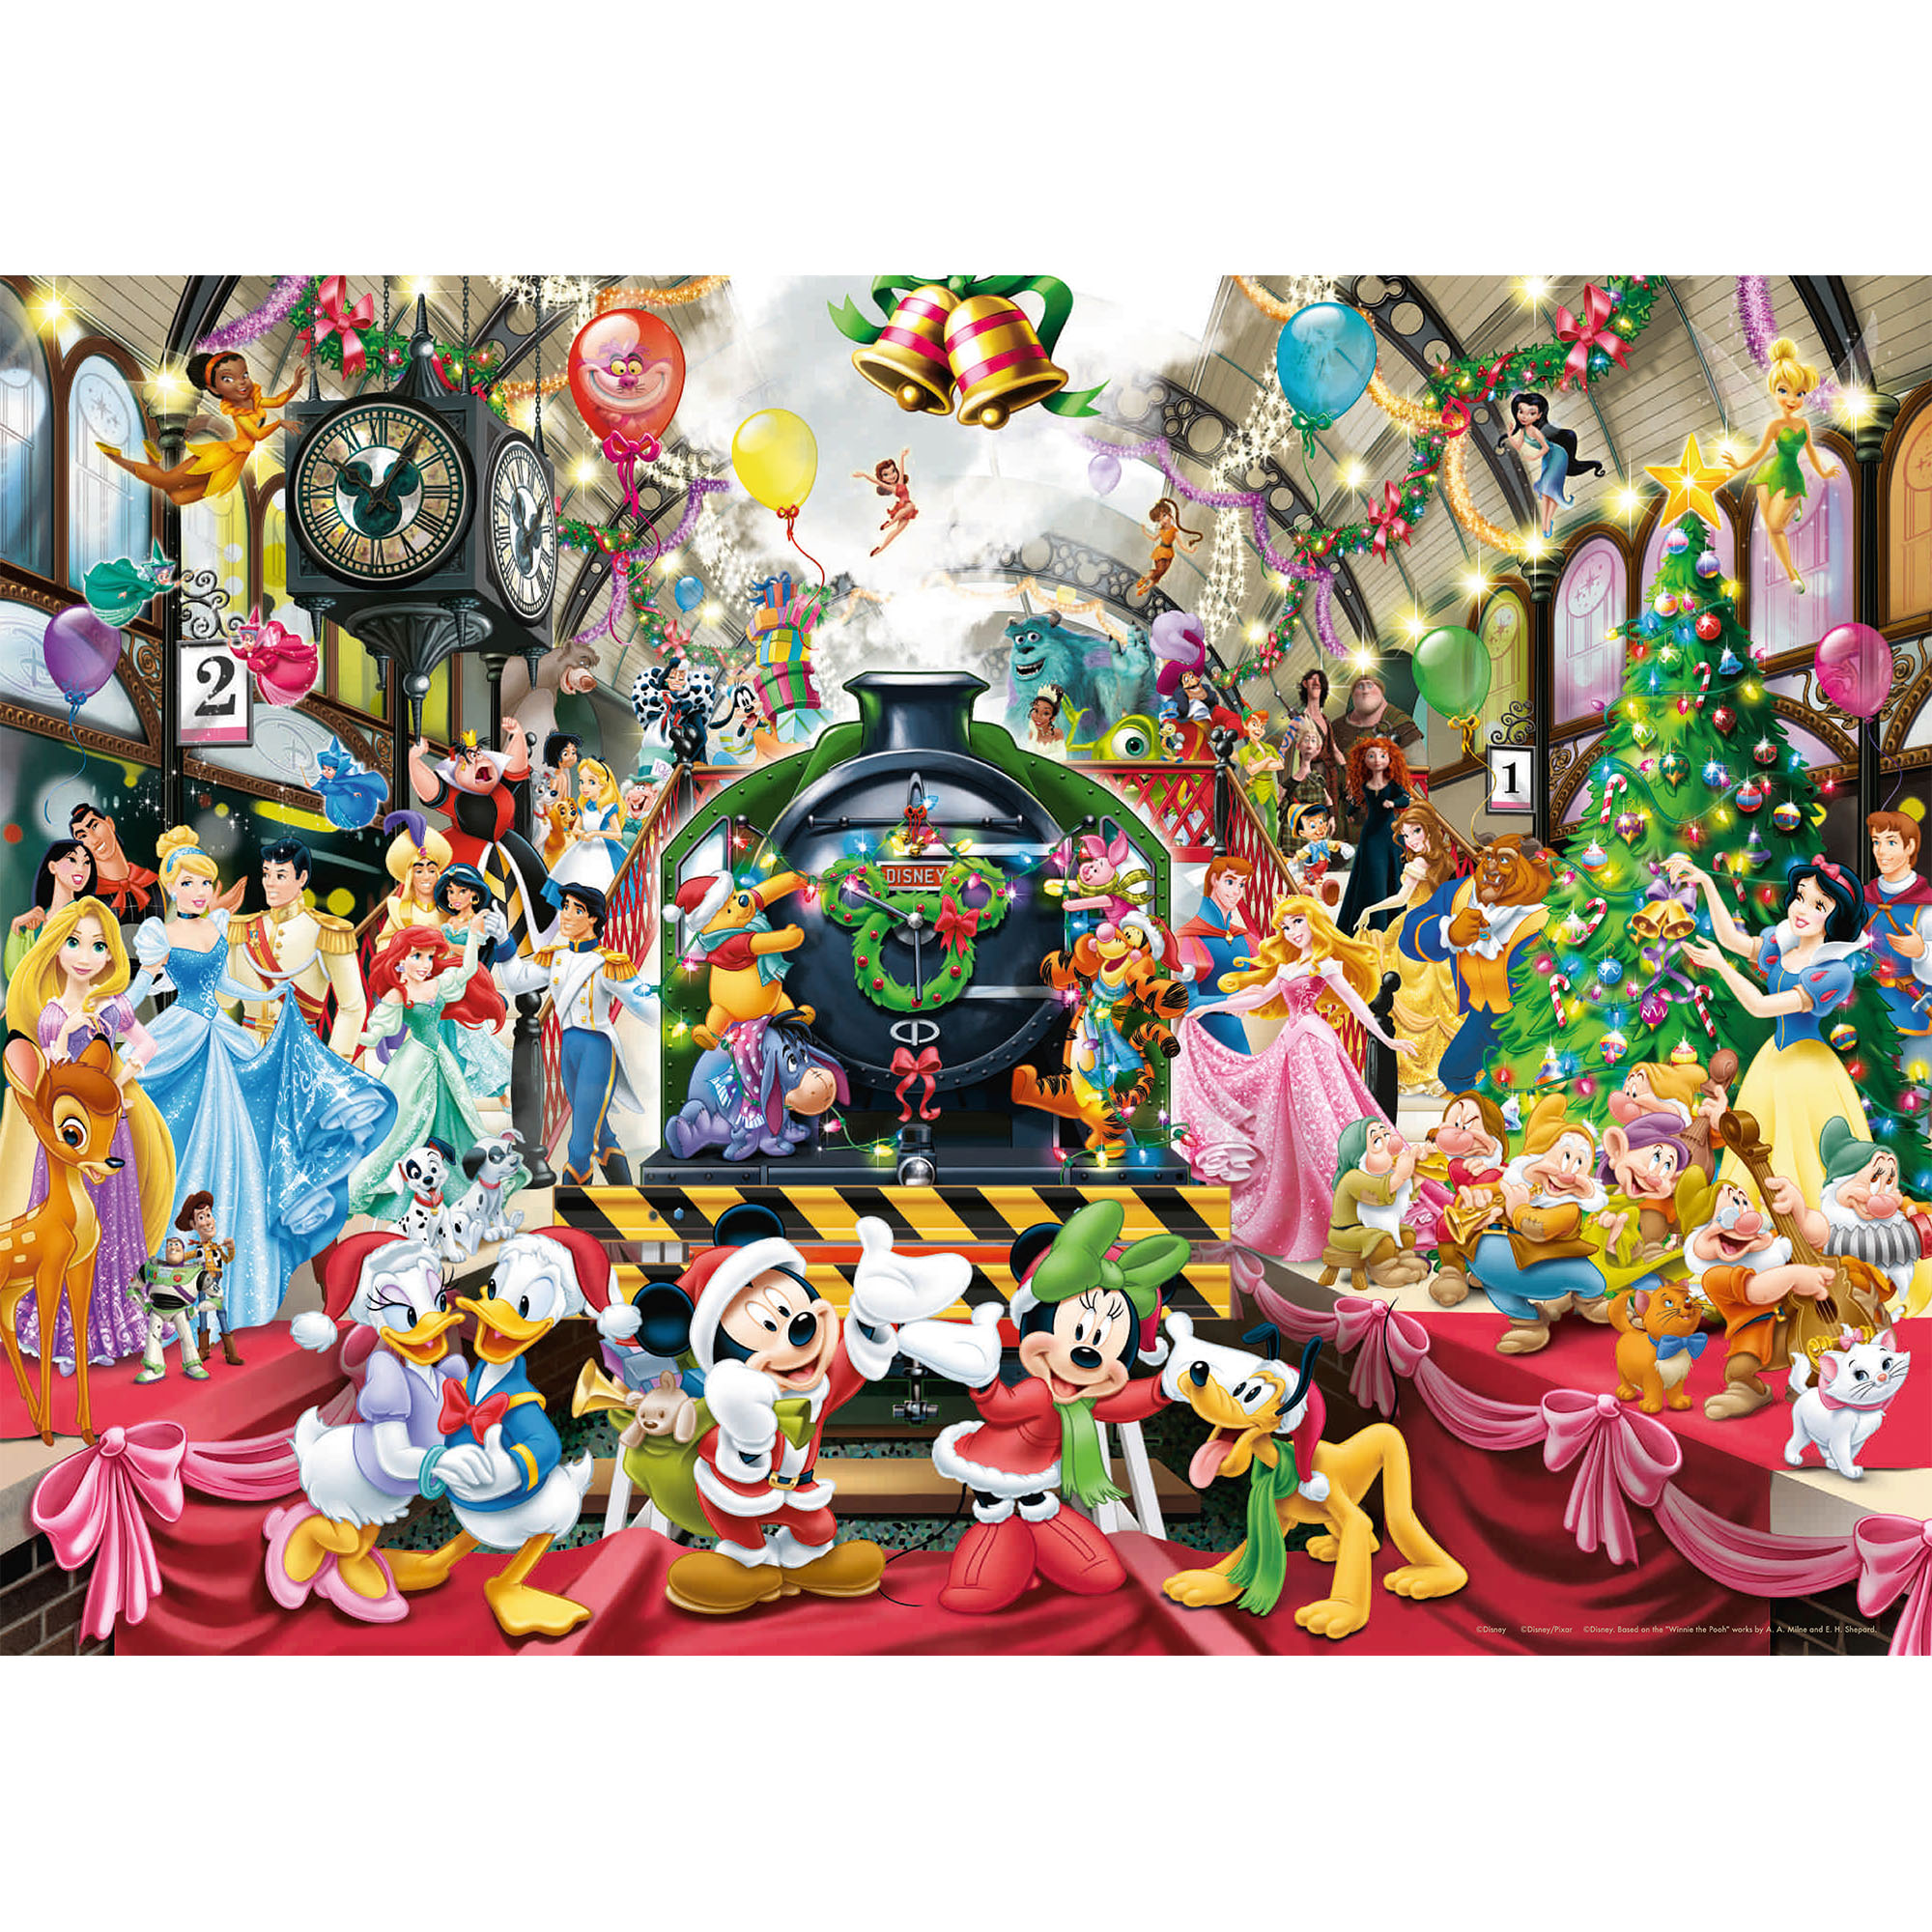 Ravensburger Puzzle 1000 pezzi 19553 - Il treno di Natale Disney, , large